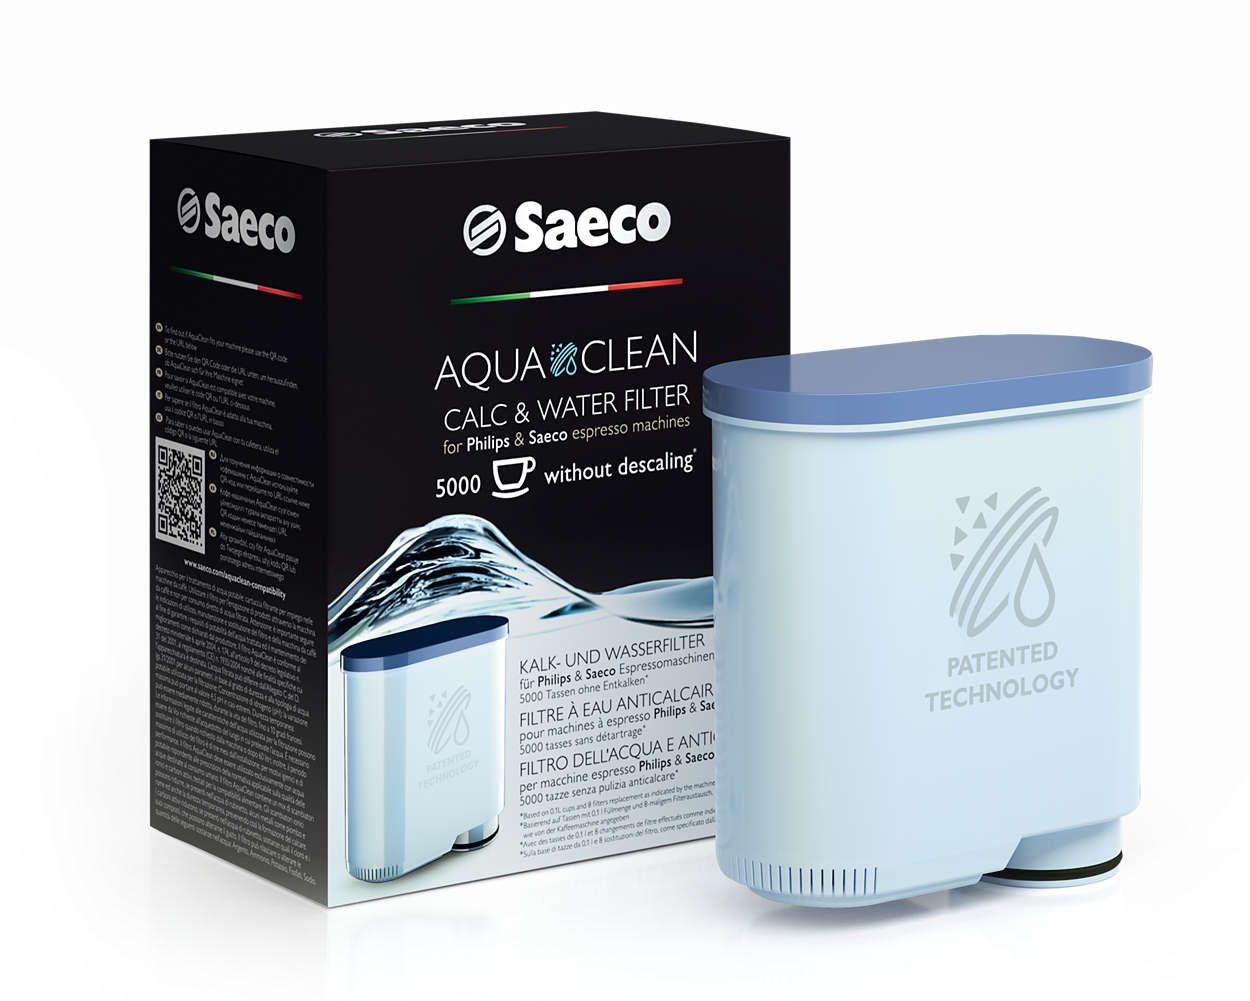 AquaClean Calc and Water filter CA6903/47